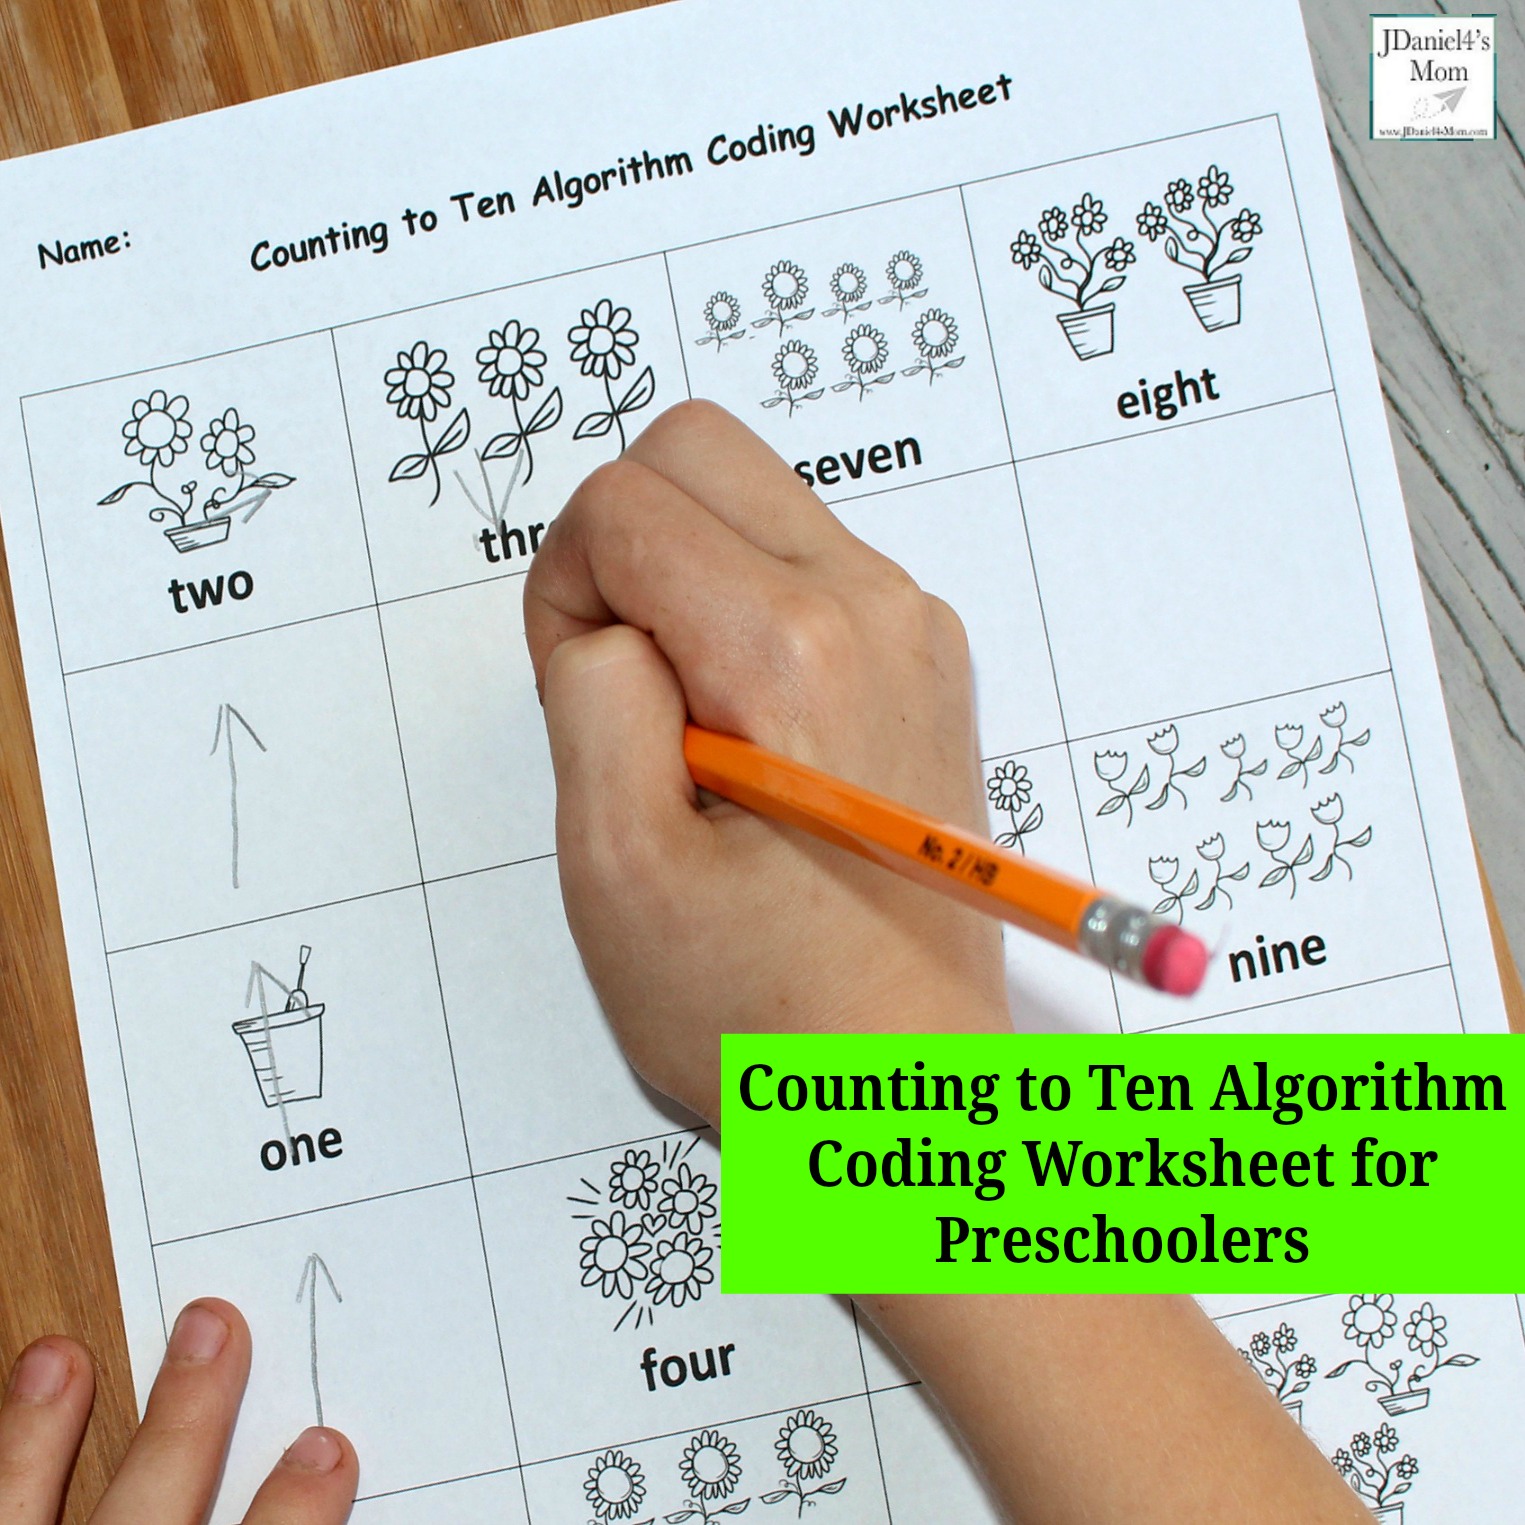 https://jdaniel4smom.com/wp-content/uploads/Counting-to-Ten-Algorithm-Coding-Worksheet-for-Preschoolers-Facebook.jpg